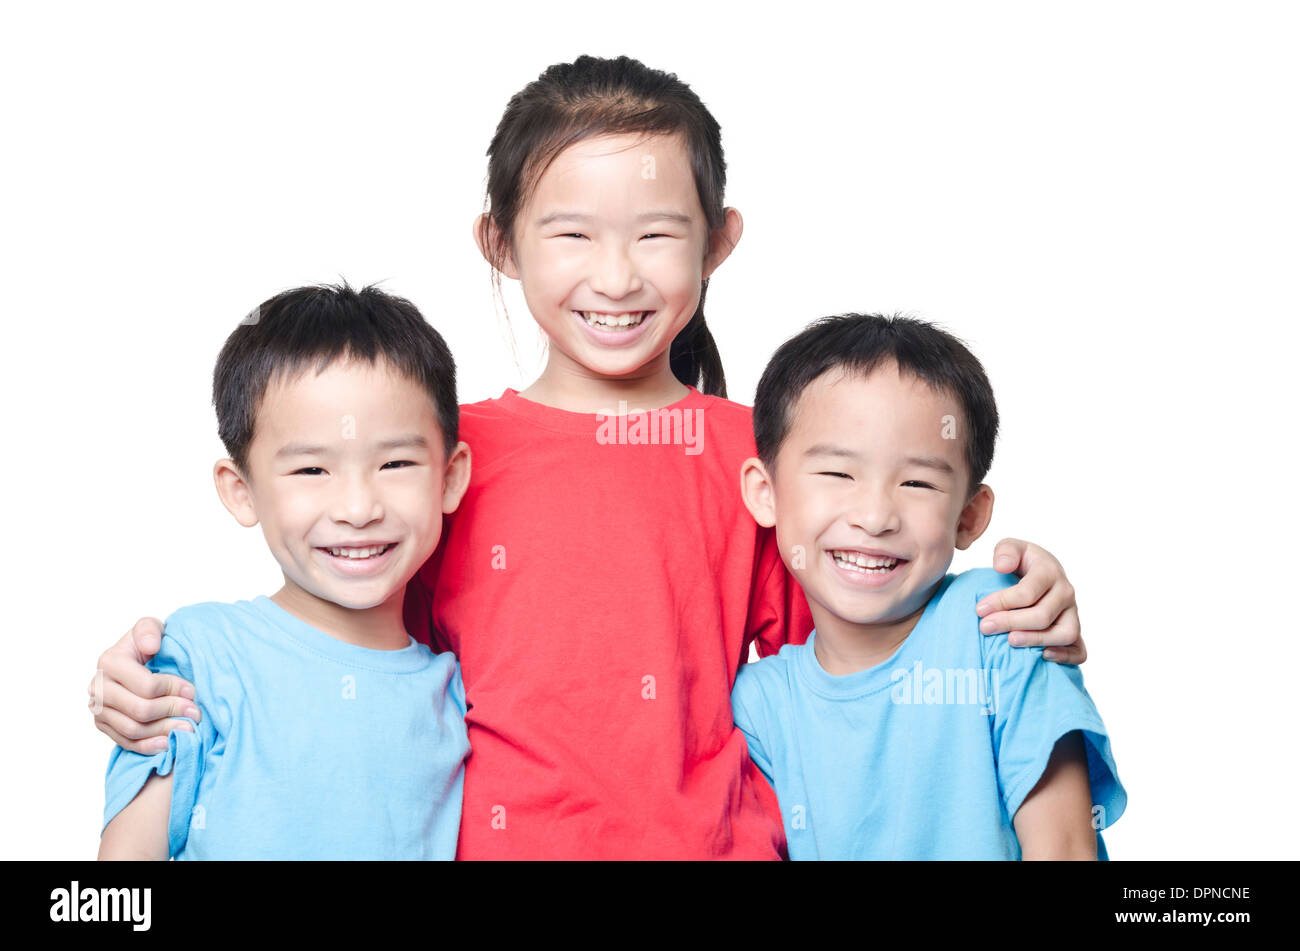 Smiling children Stock Photo